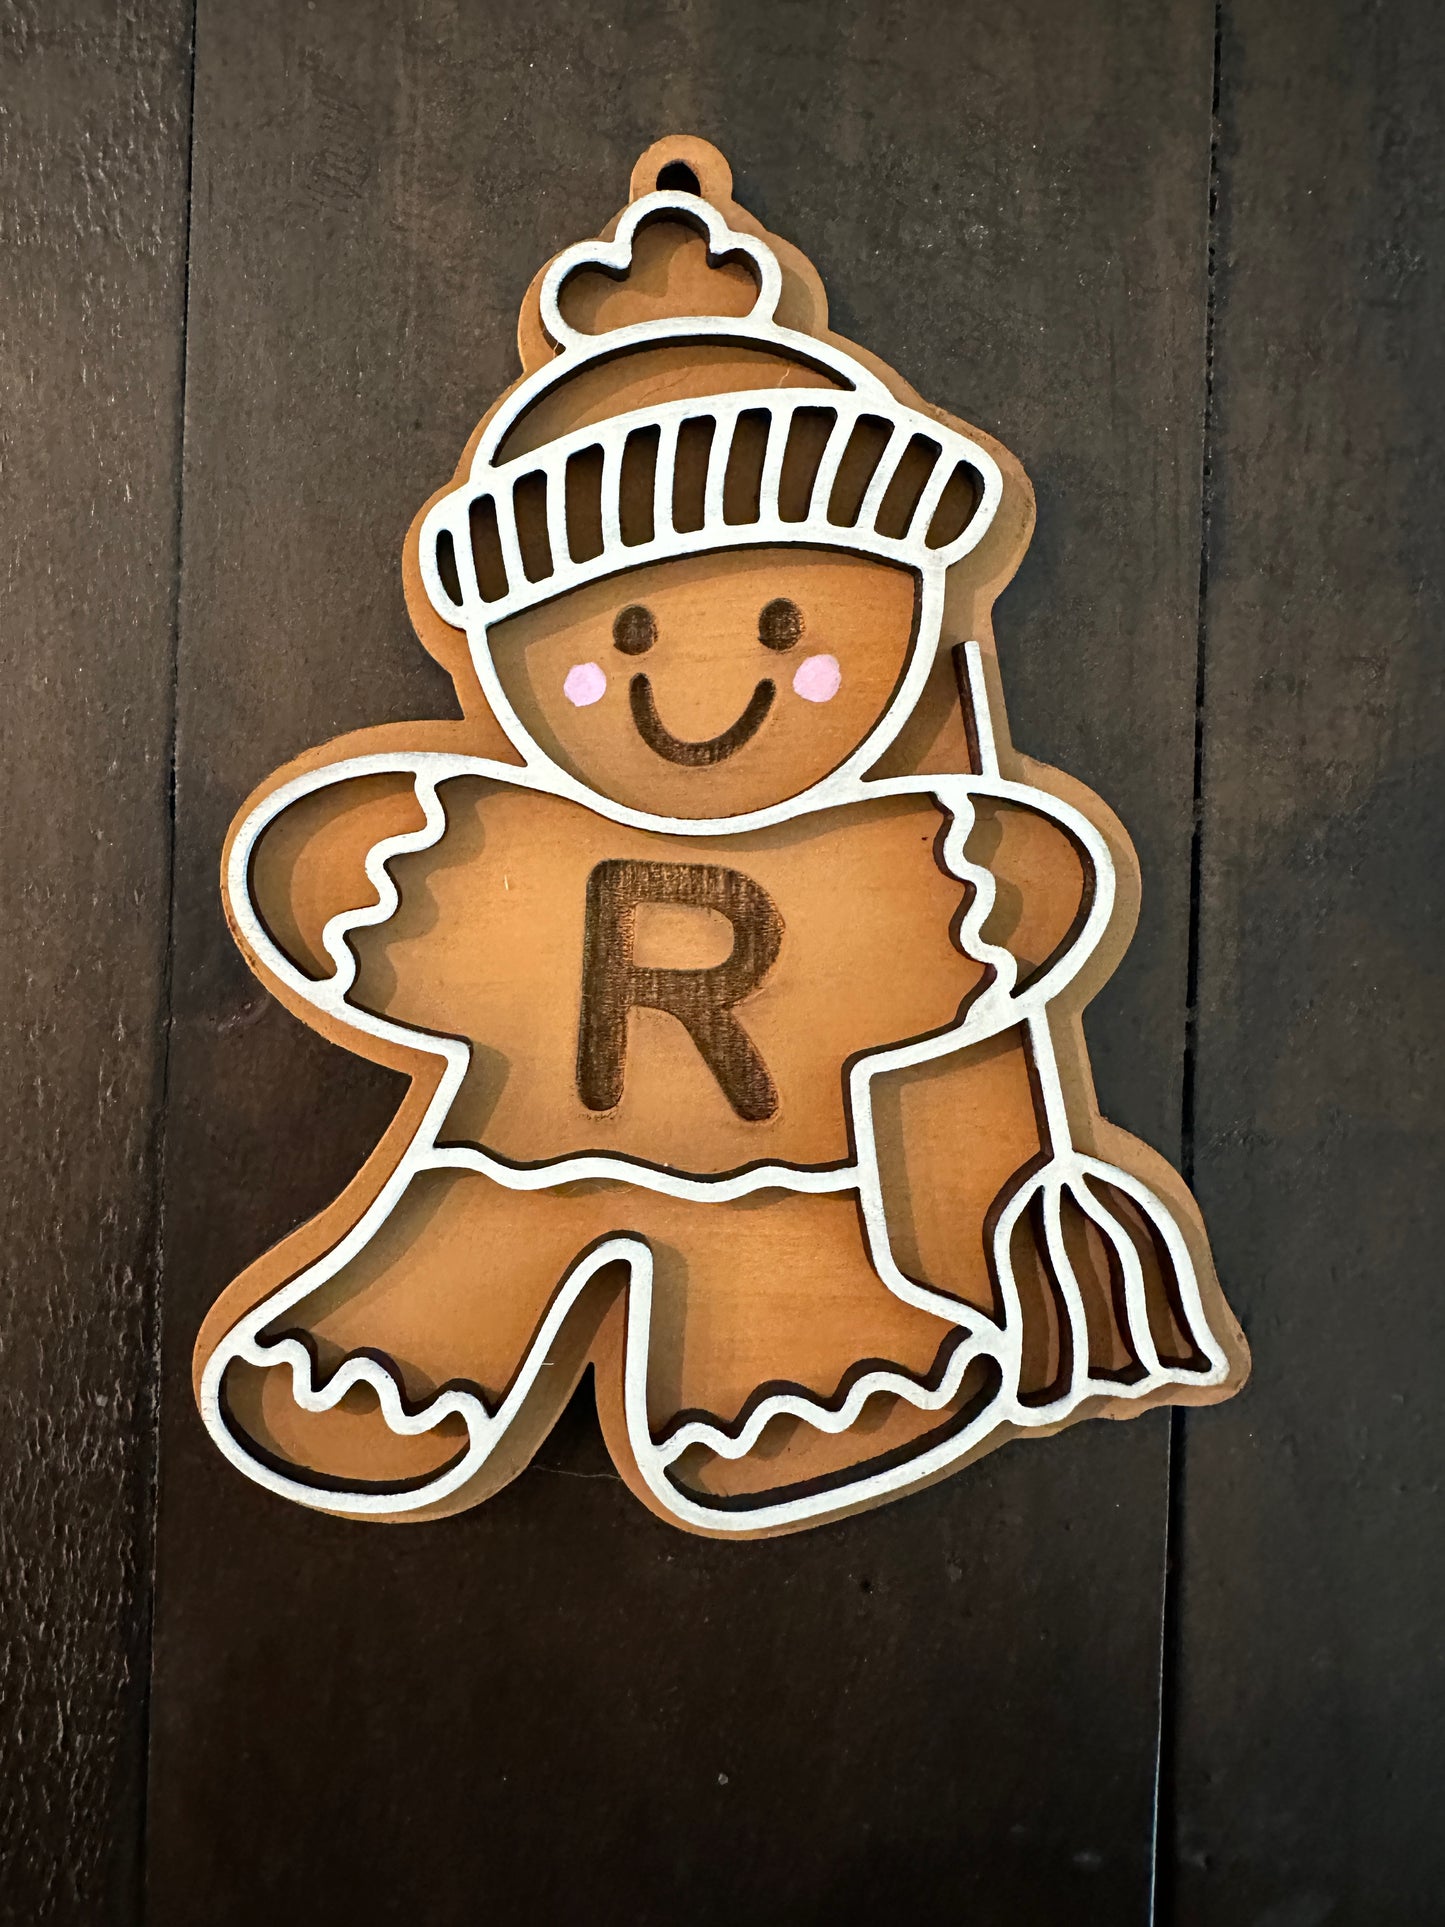 Ornament: RW Gingerbread